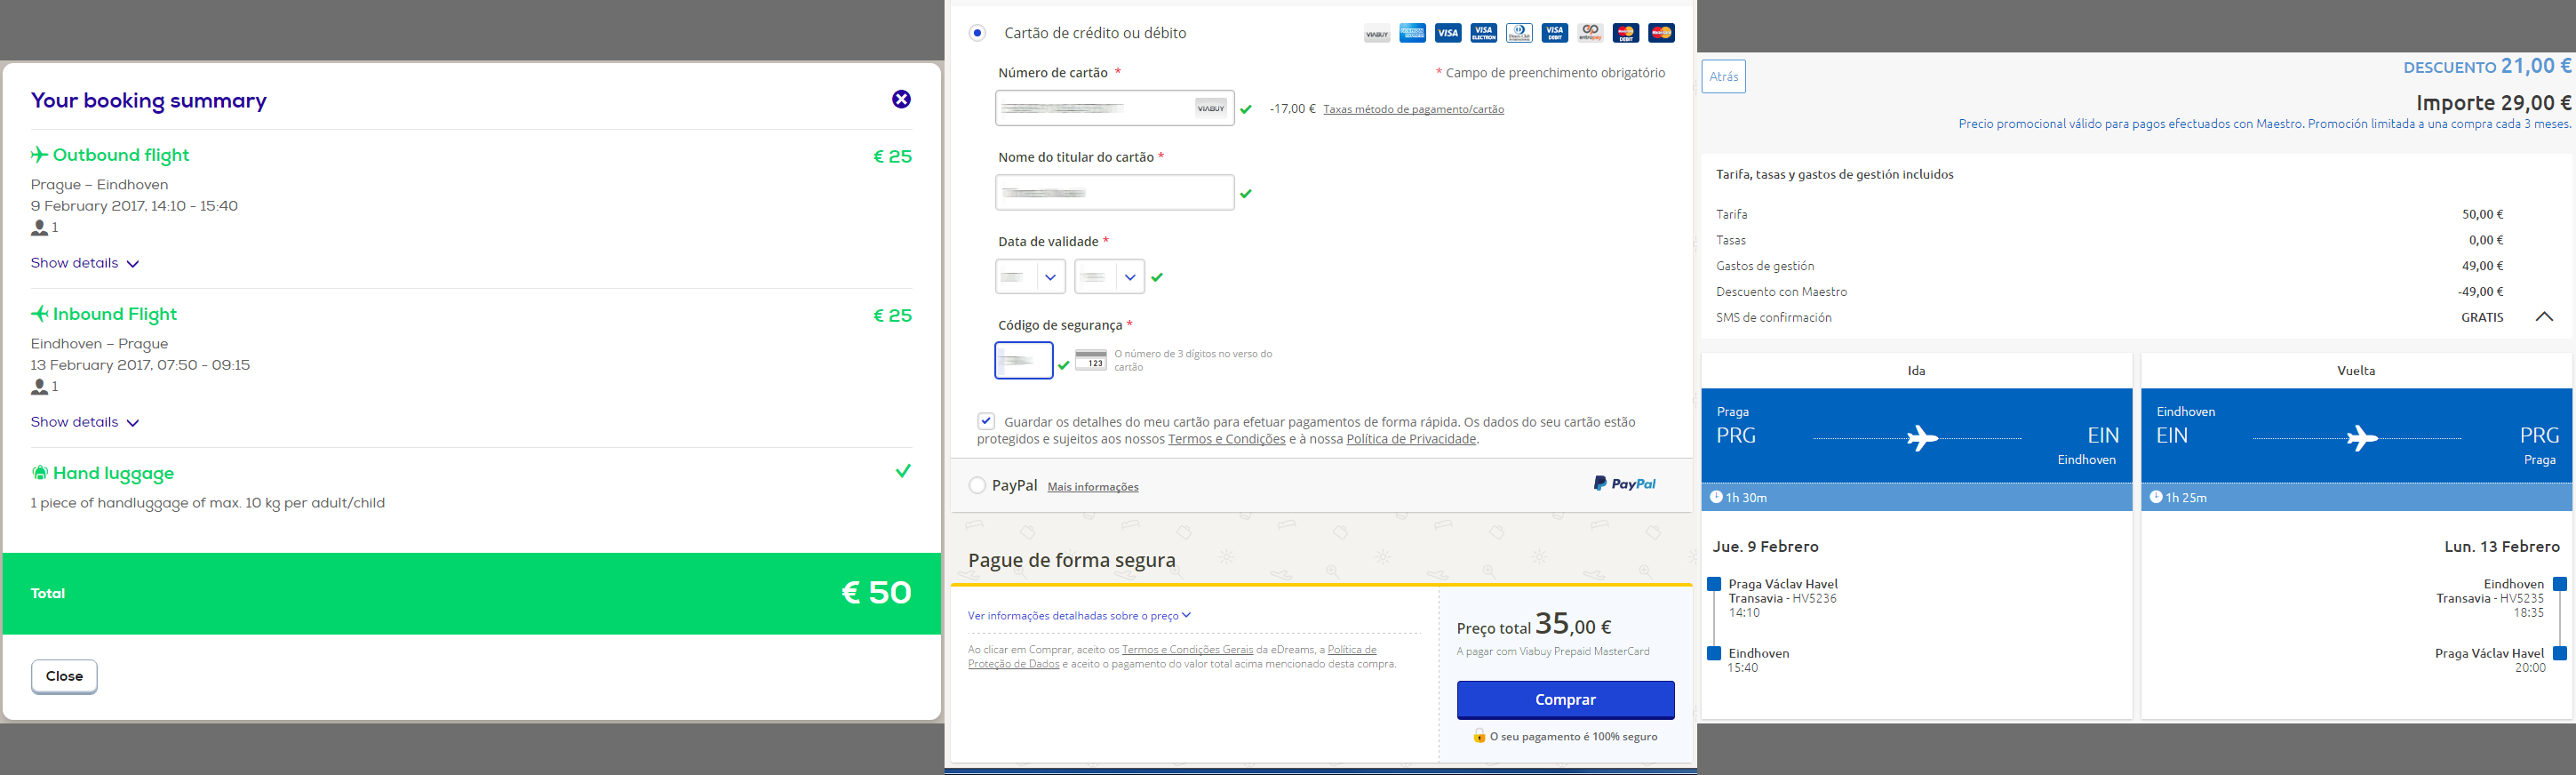 Porovnani cen na Transavia, eDreams.pt a Rumbo.es